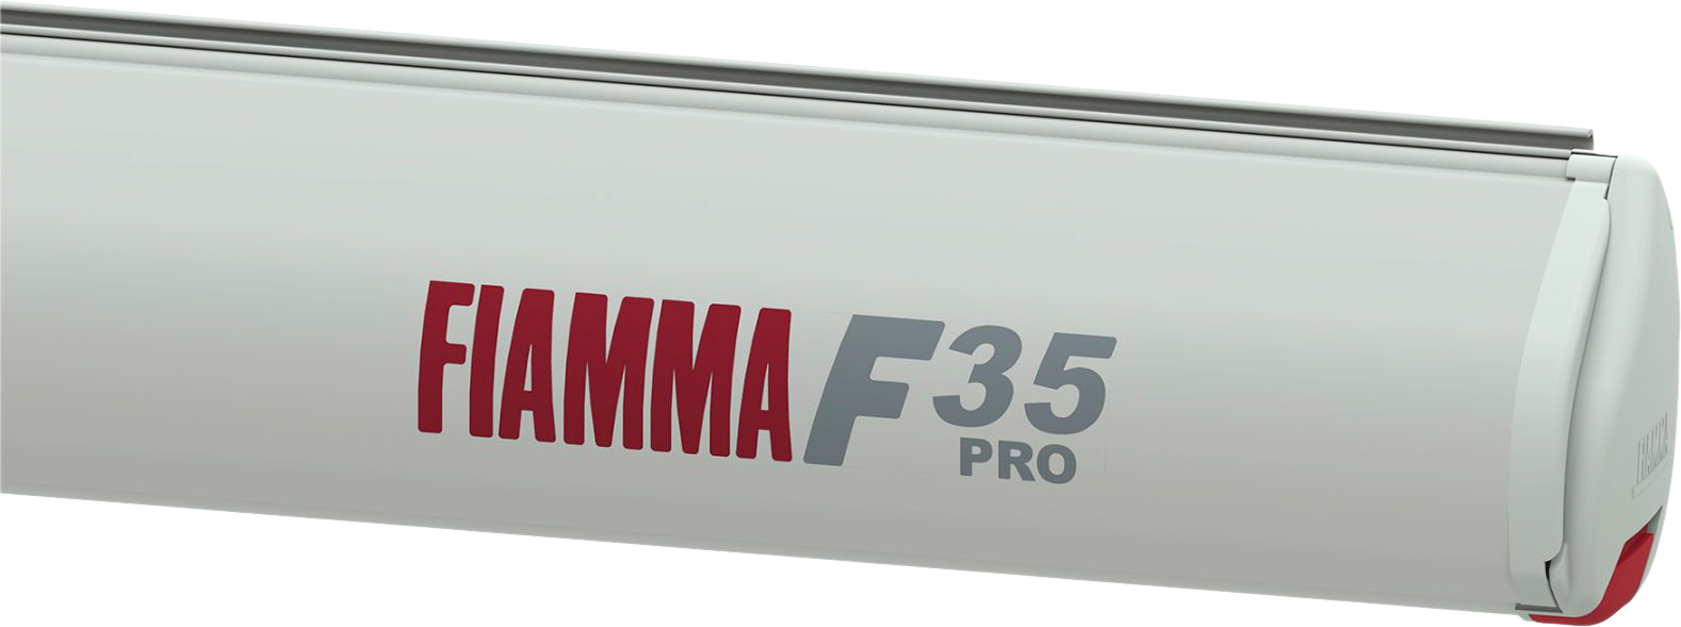 Fiamma F35 Pro 270 Markise Gehäusefarbe Titanium Tuchfarbe Royal Blue 270 cm